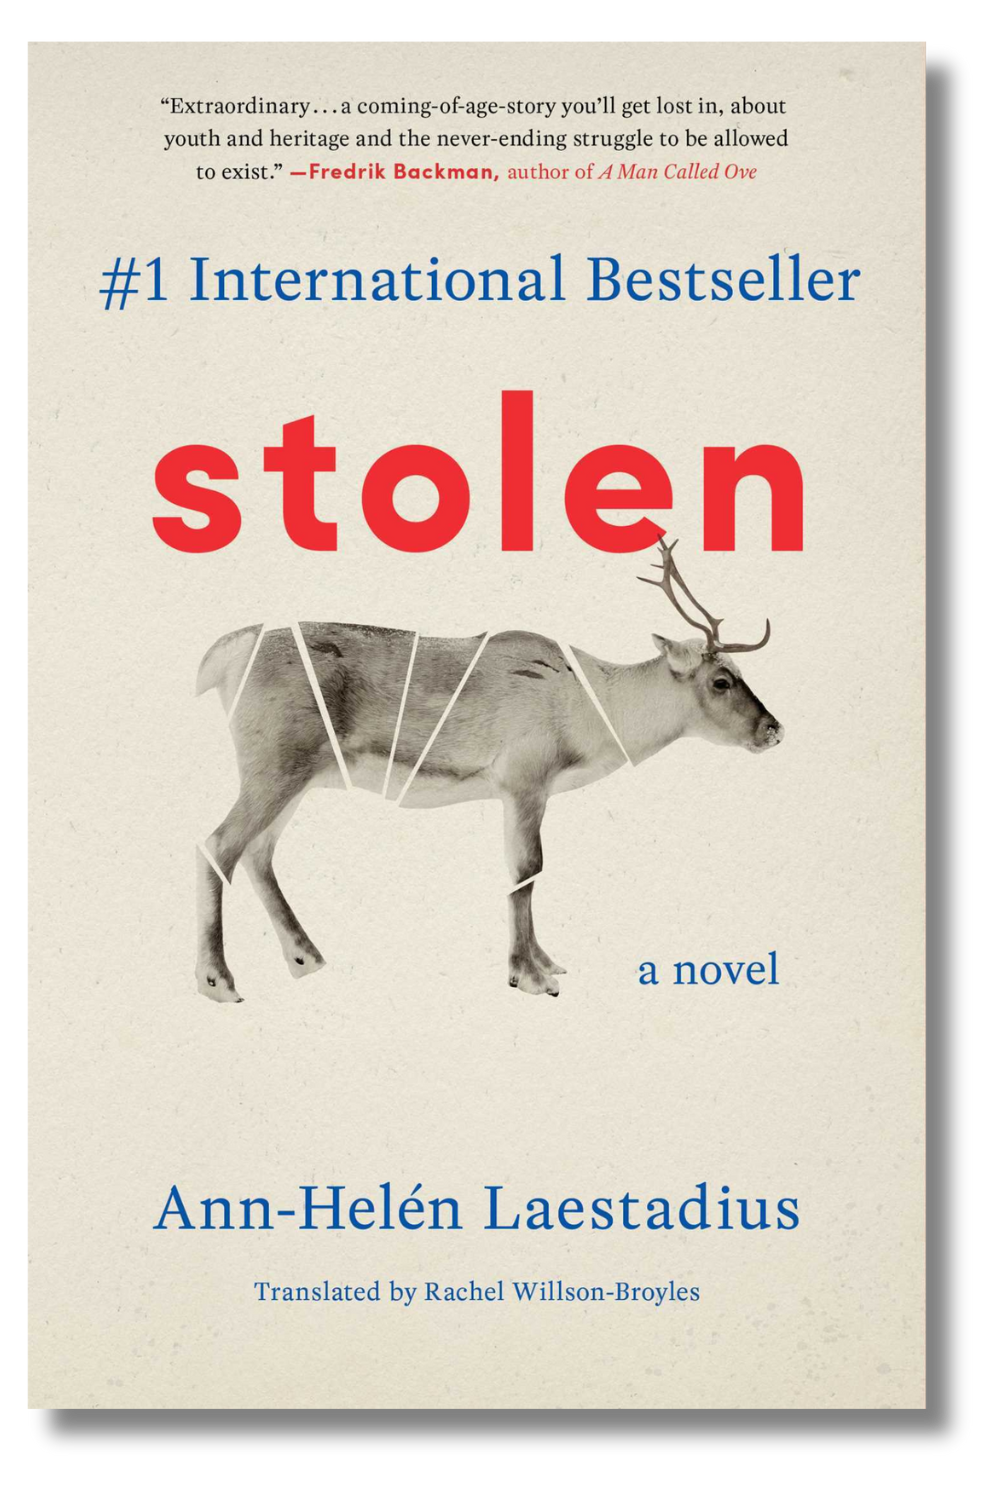 The cover of "Stolen" by Ann-Helén Laestadius, translated by Rachel Willson-Broyles